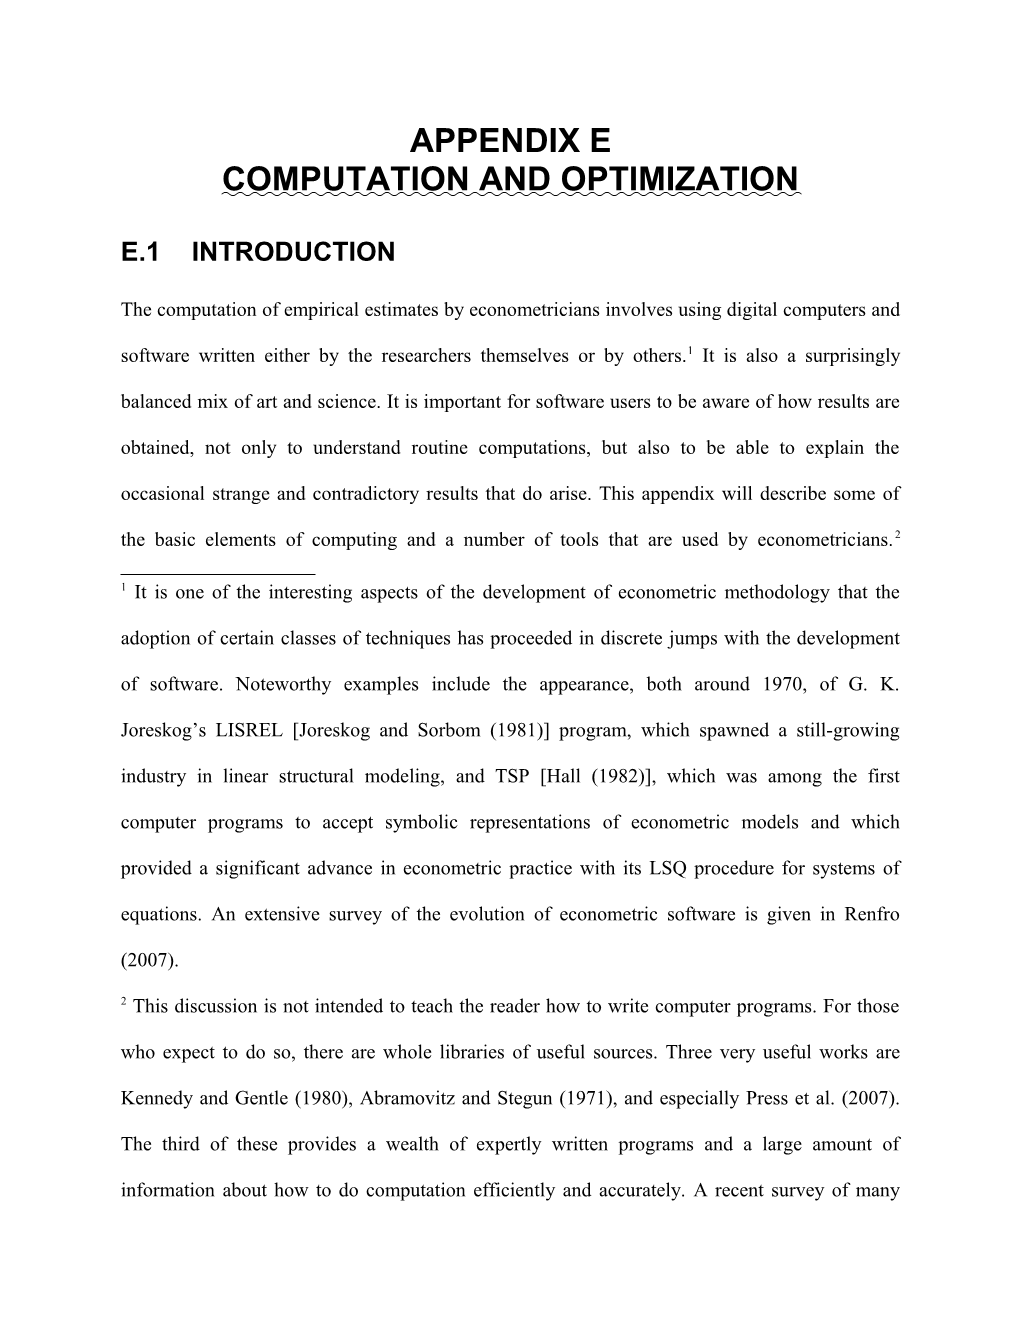 Computation and Optimization